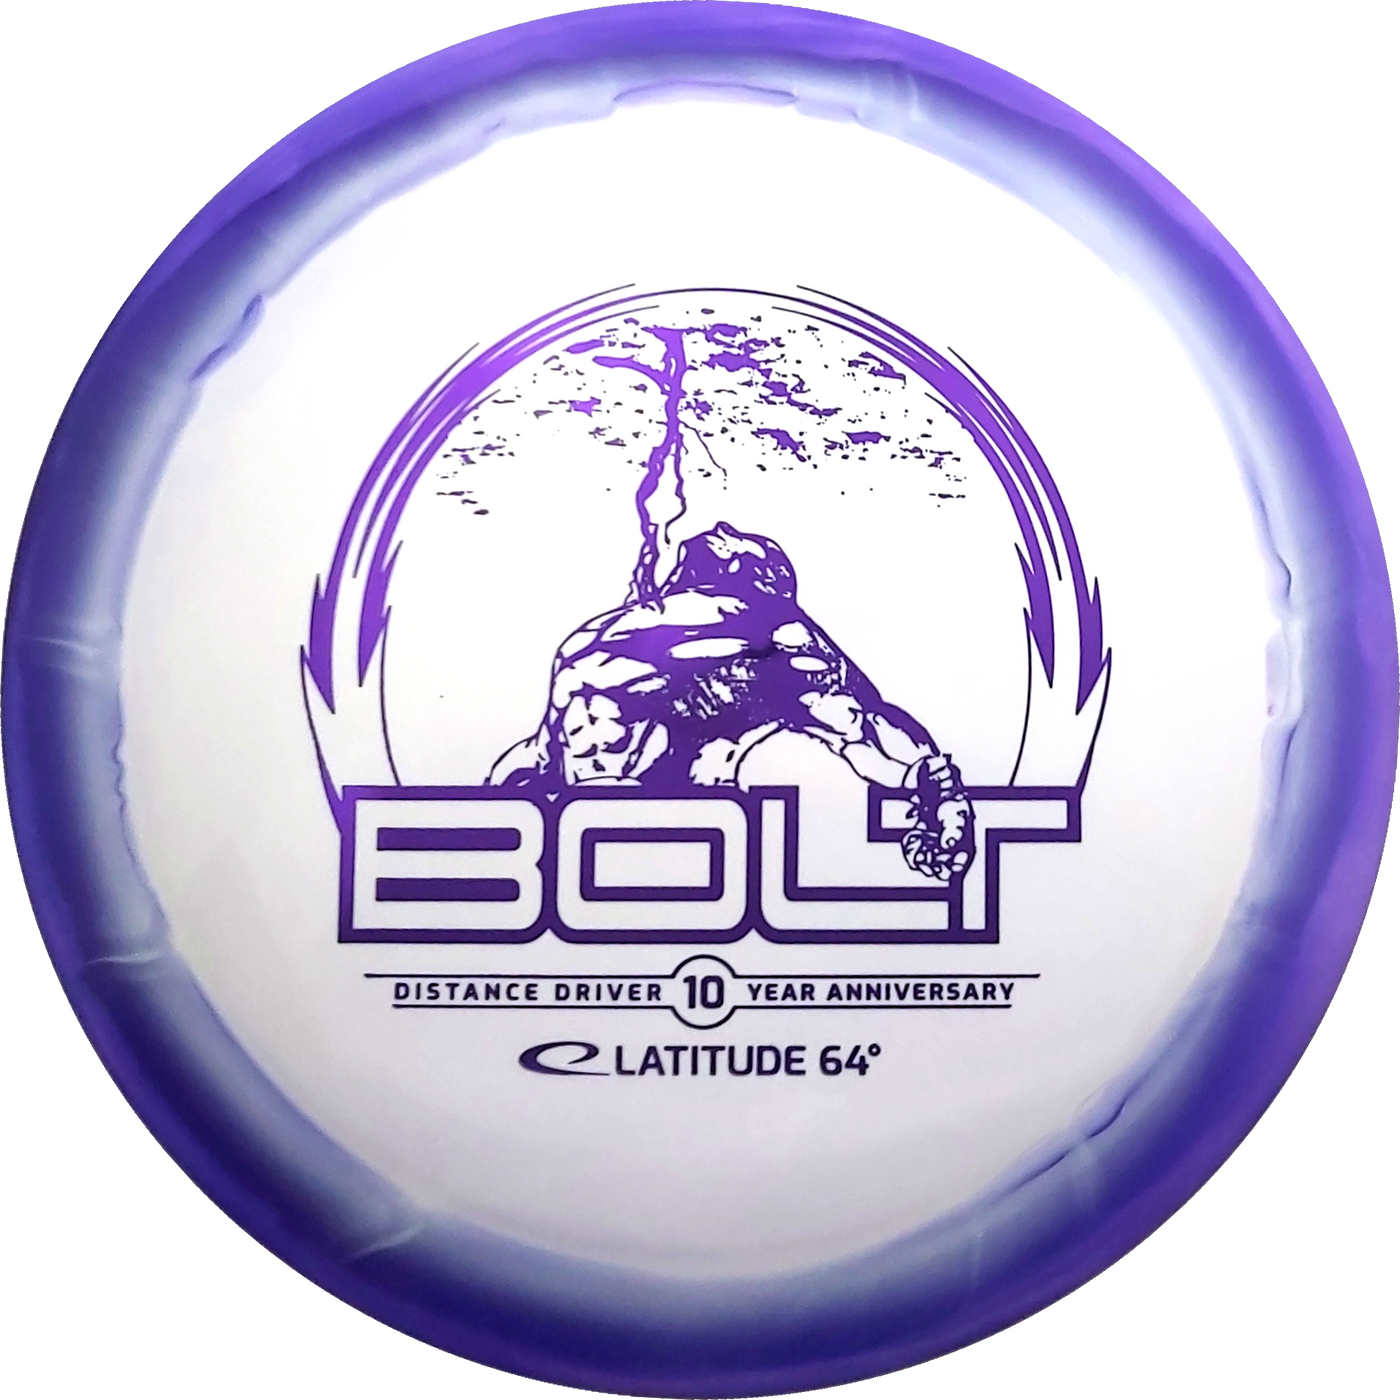 Latitude 64 Gold Orbit Bolt 10 Year